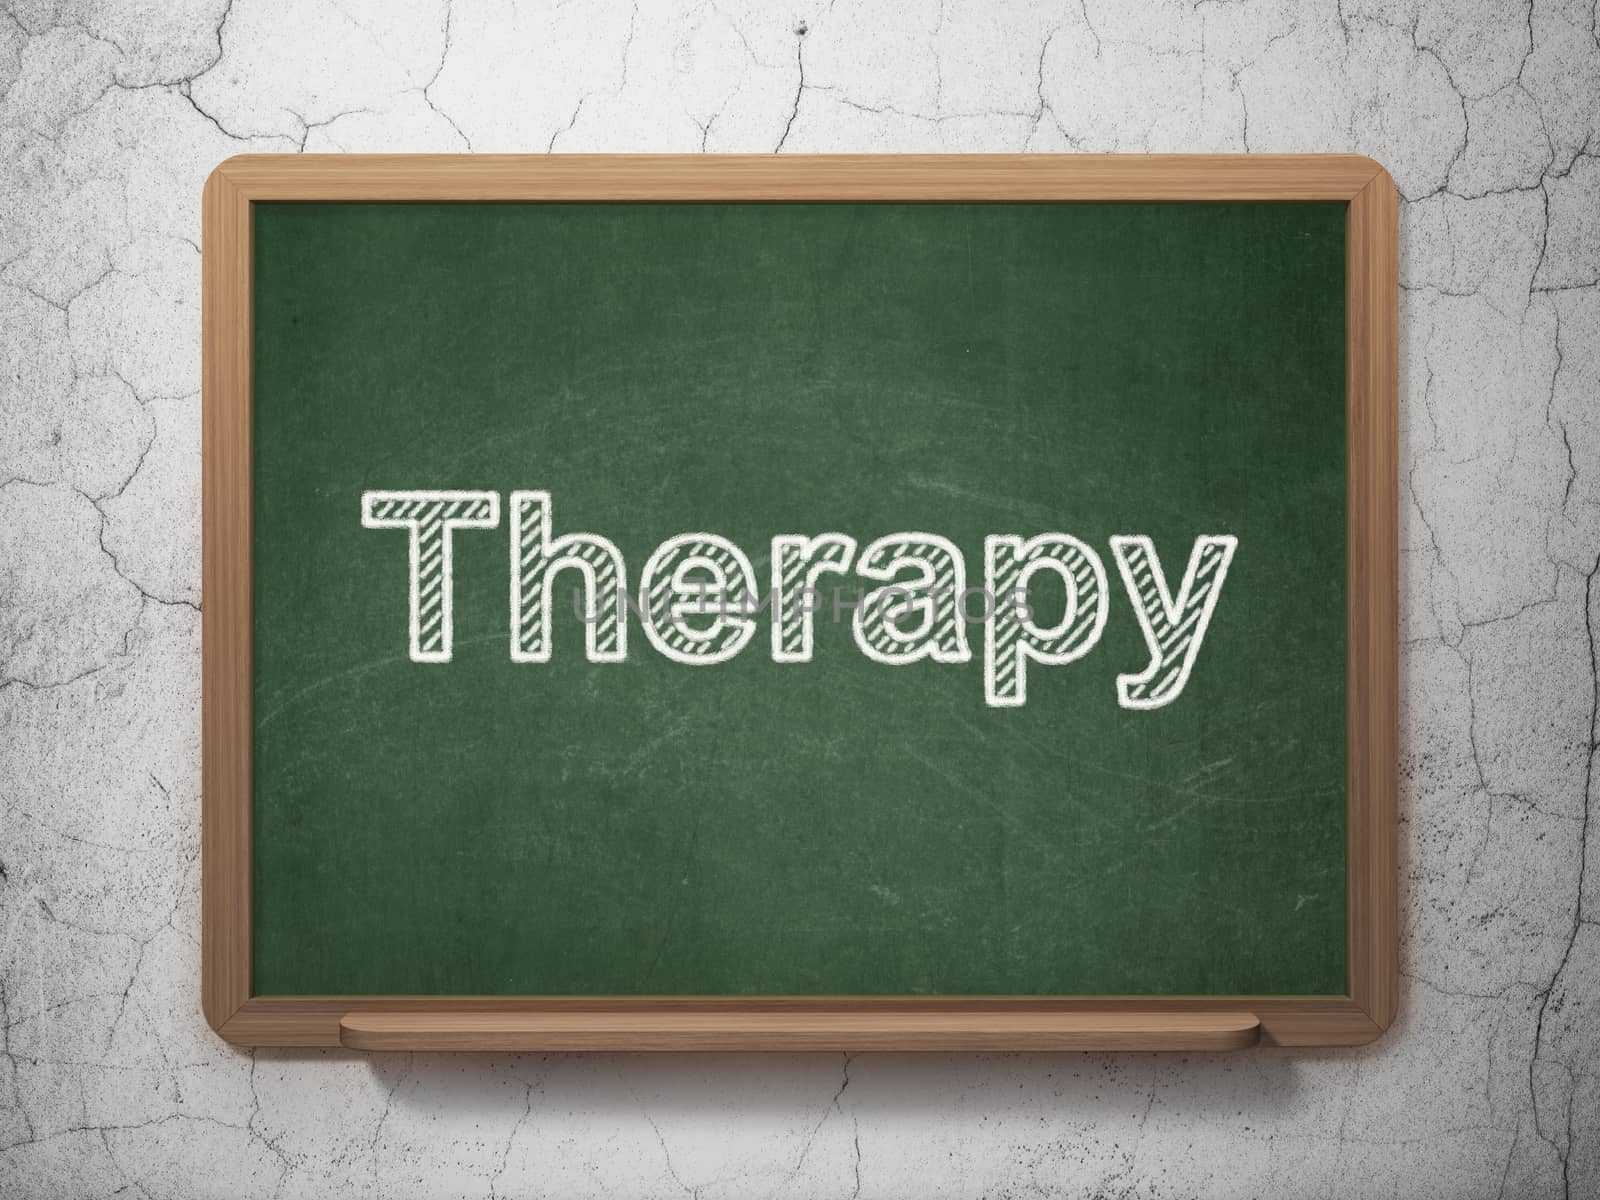 Medicine concept: Therapy on chalkboard background by maxkabakov